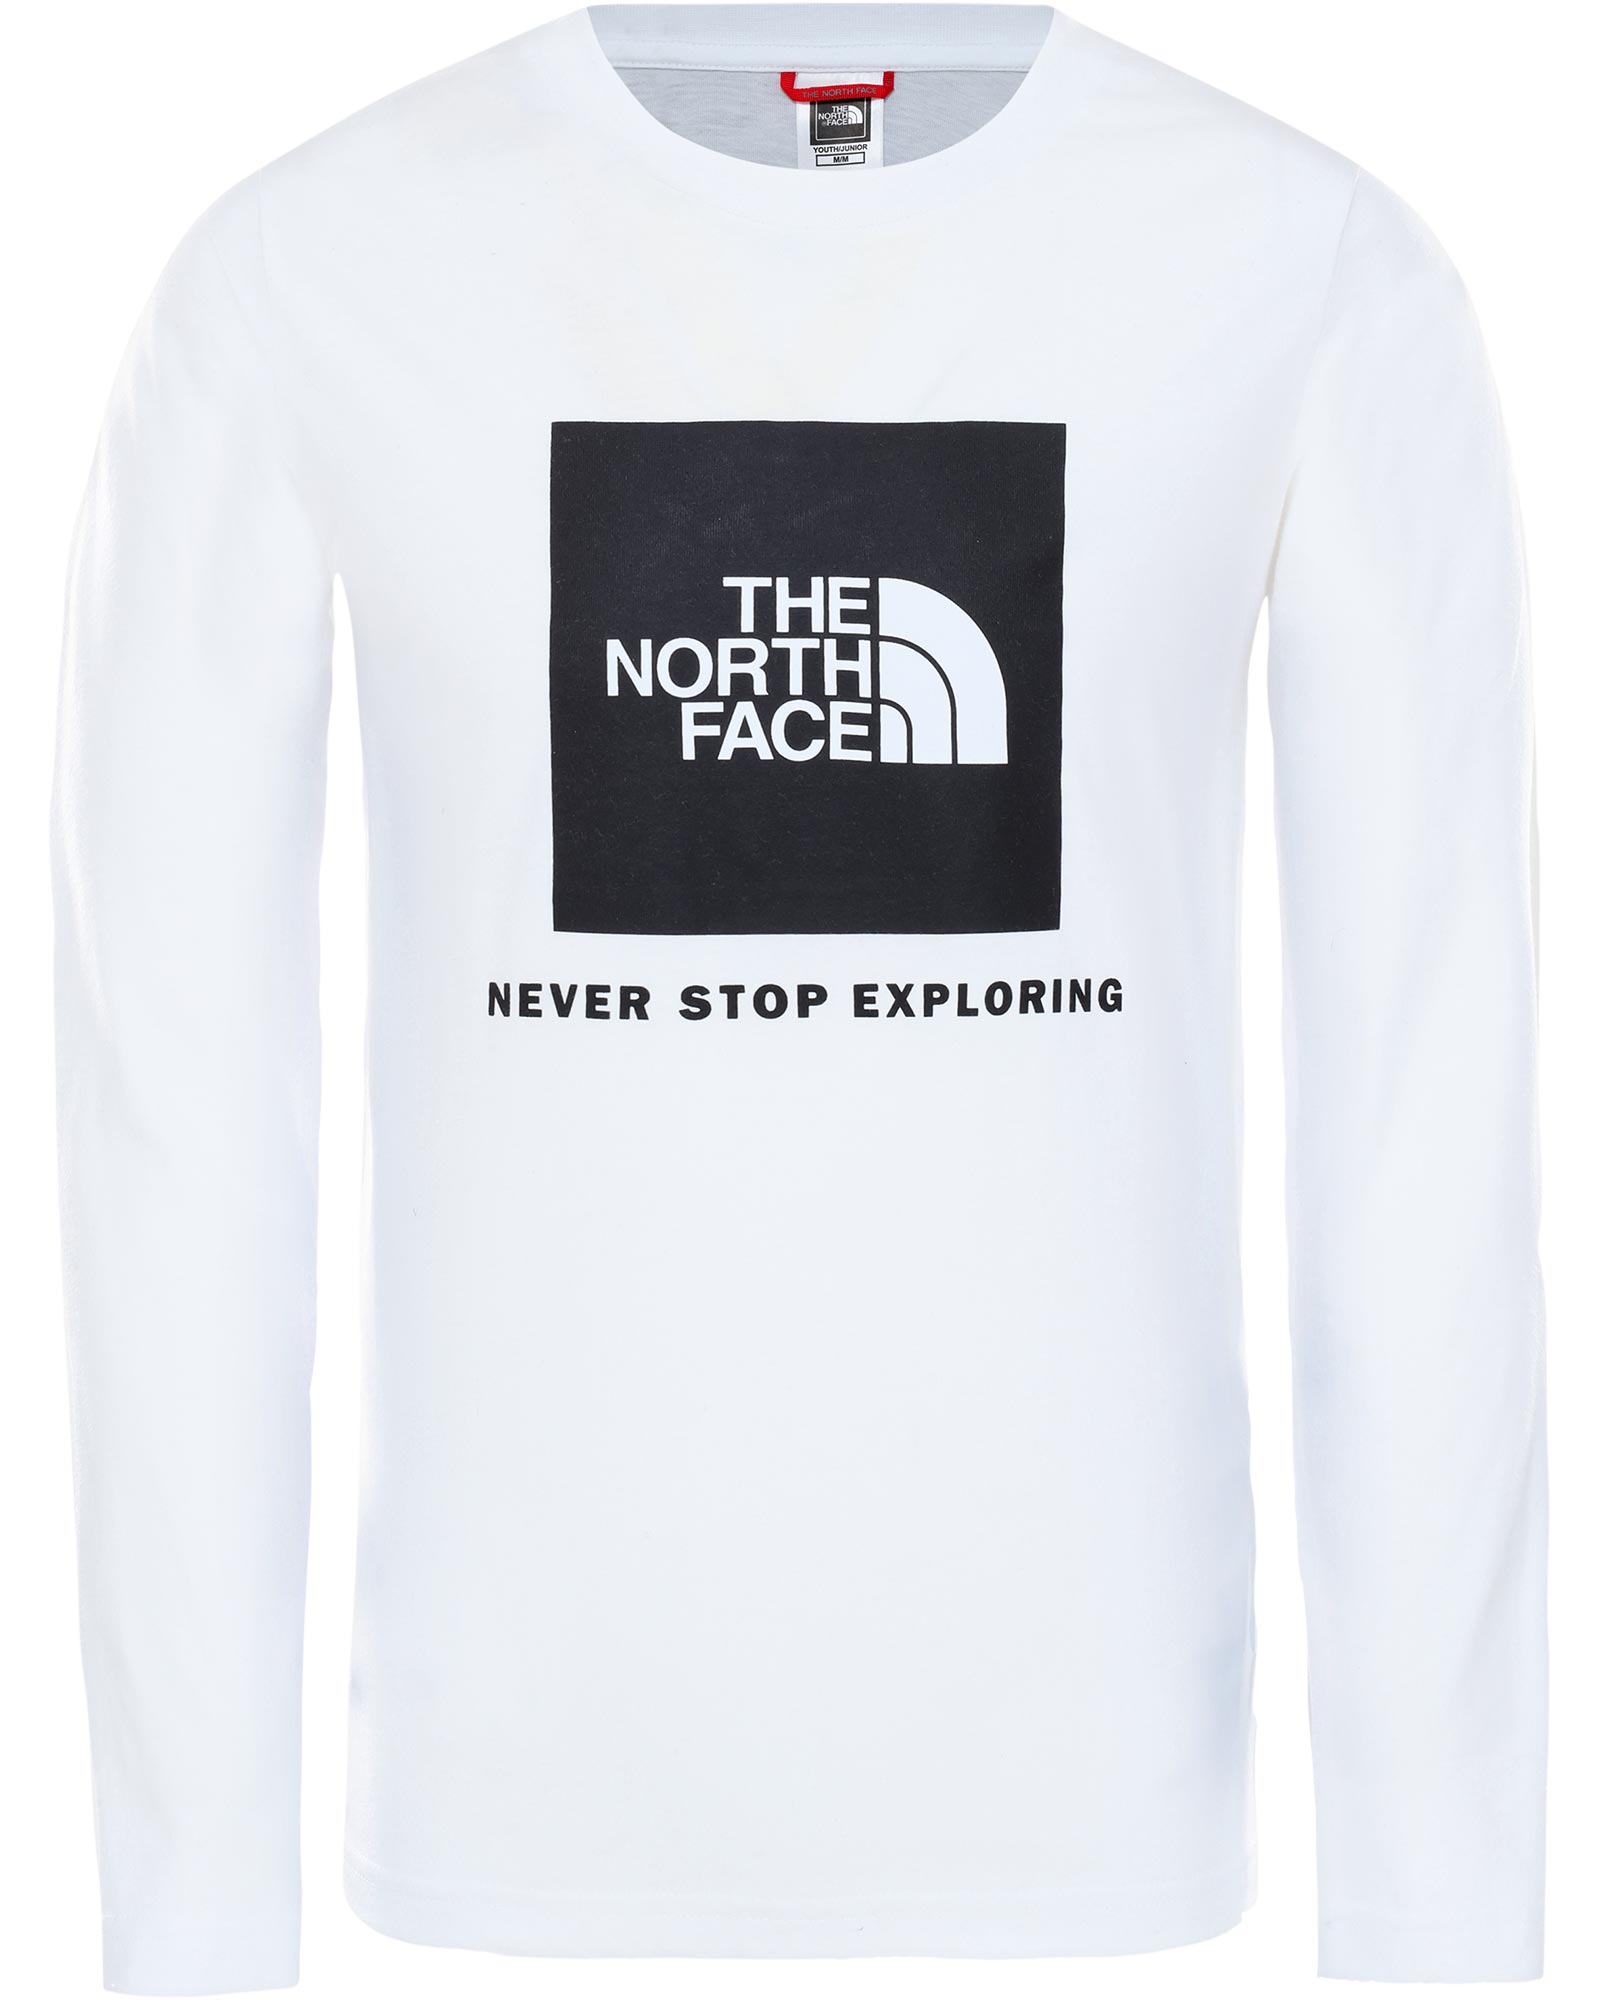 The North Face Box Kids Long Sleeve T-shirt Xl